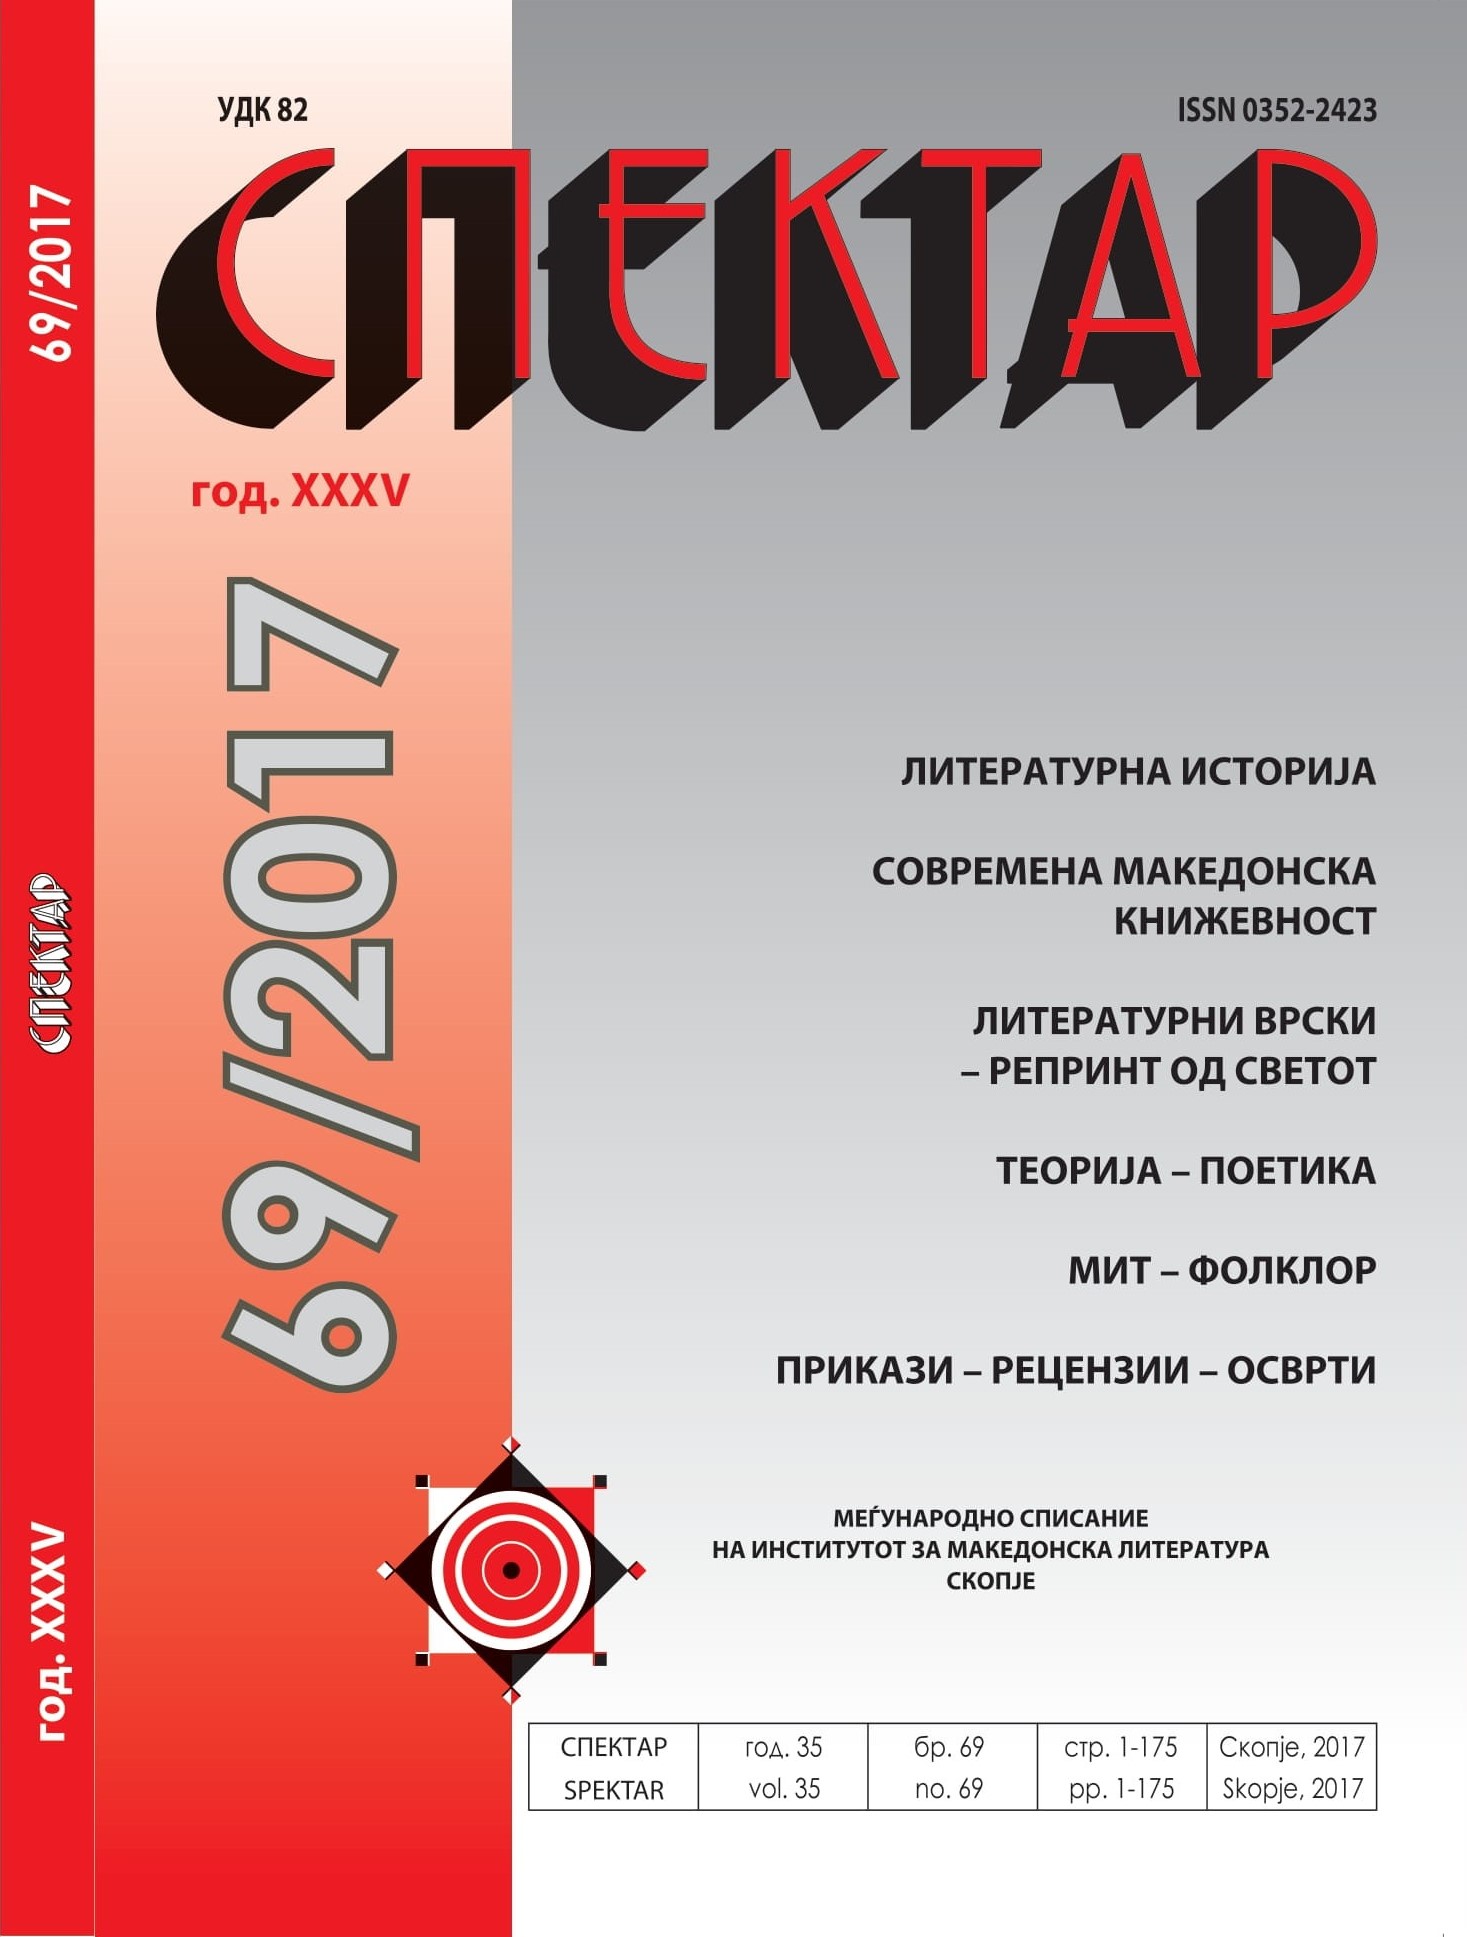 THE LITERARY AND EDUCATIONAL WORK OF CAREVNA
MILADINOVA-ALEKSIEVA Cover Image